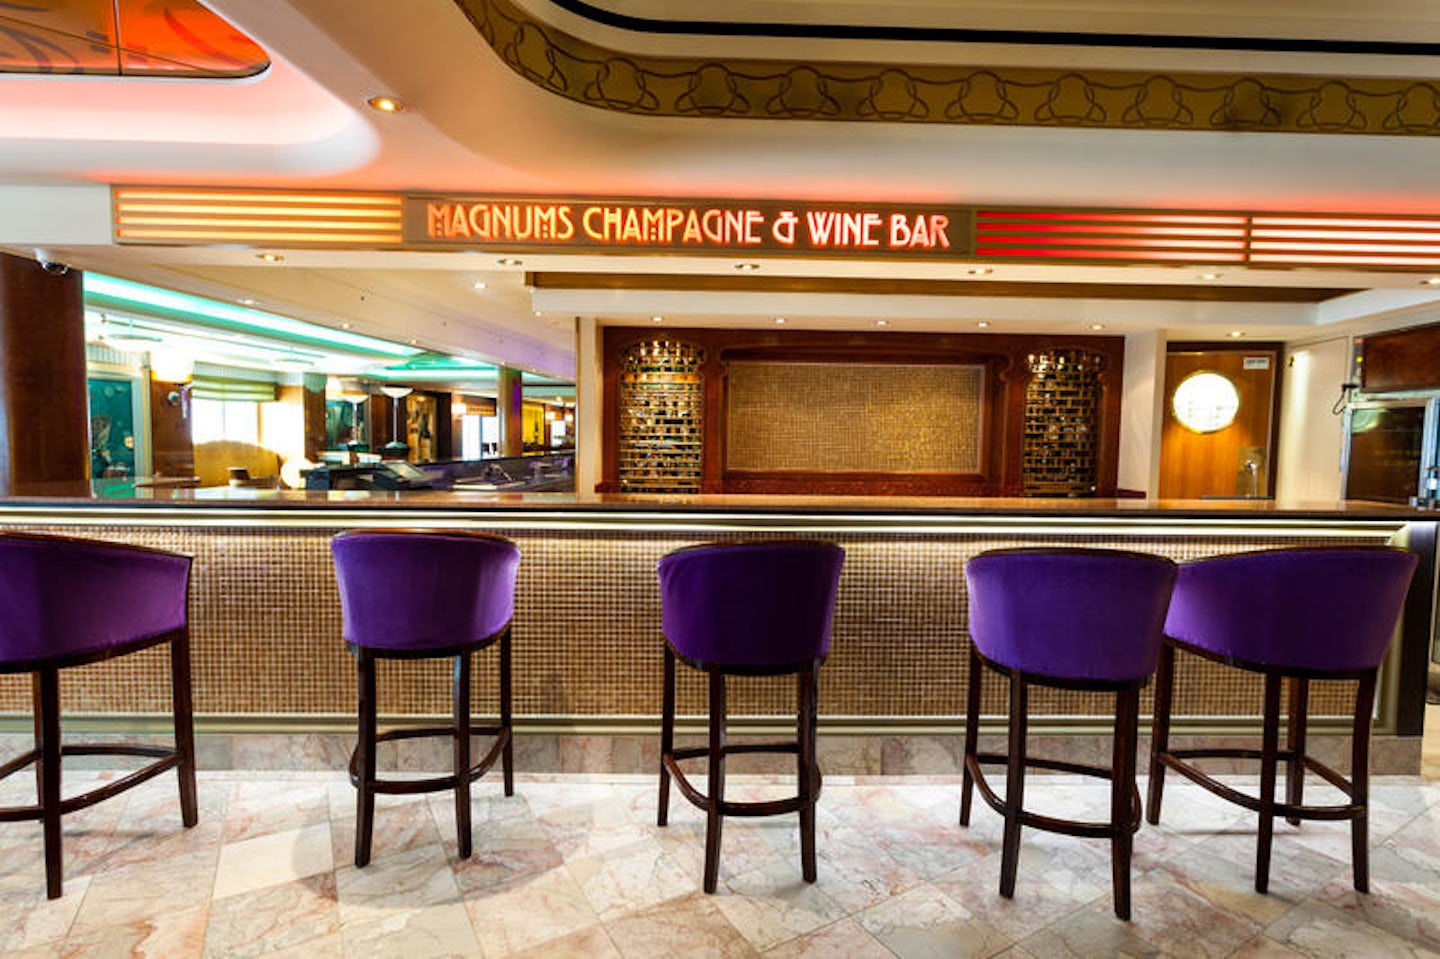 Magnum's Champagne & Wine Bar on Norwegian Jade